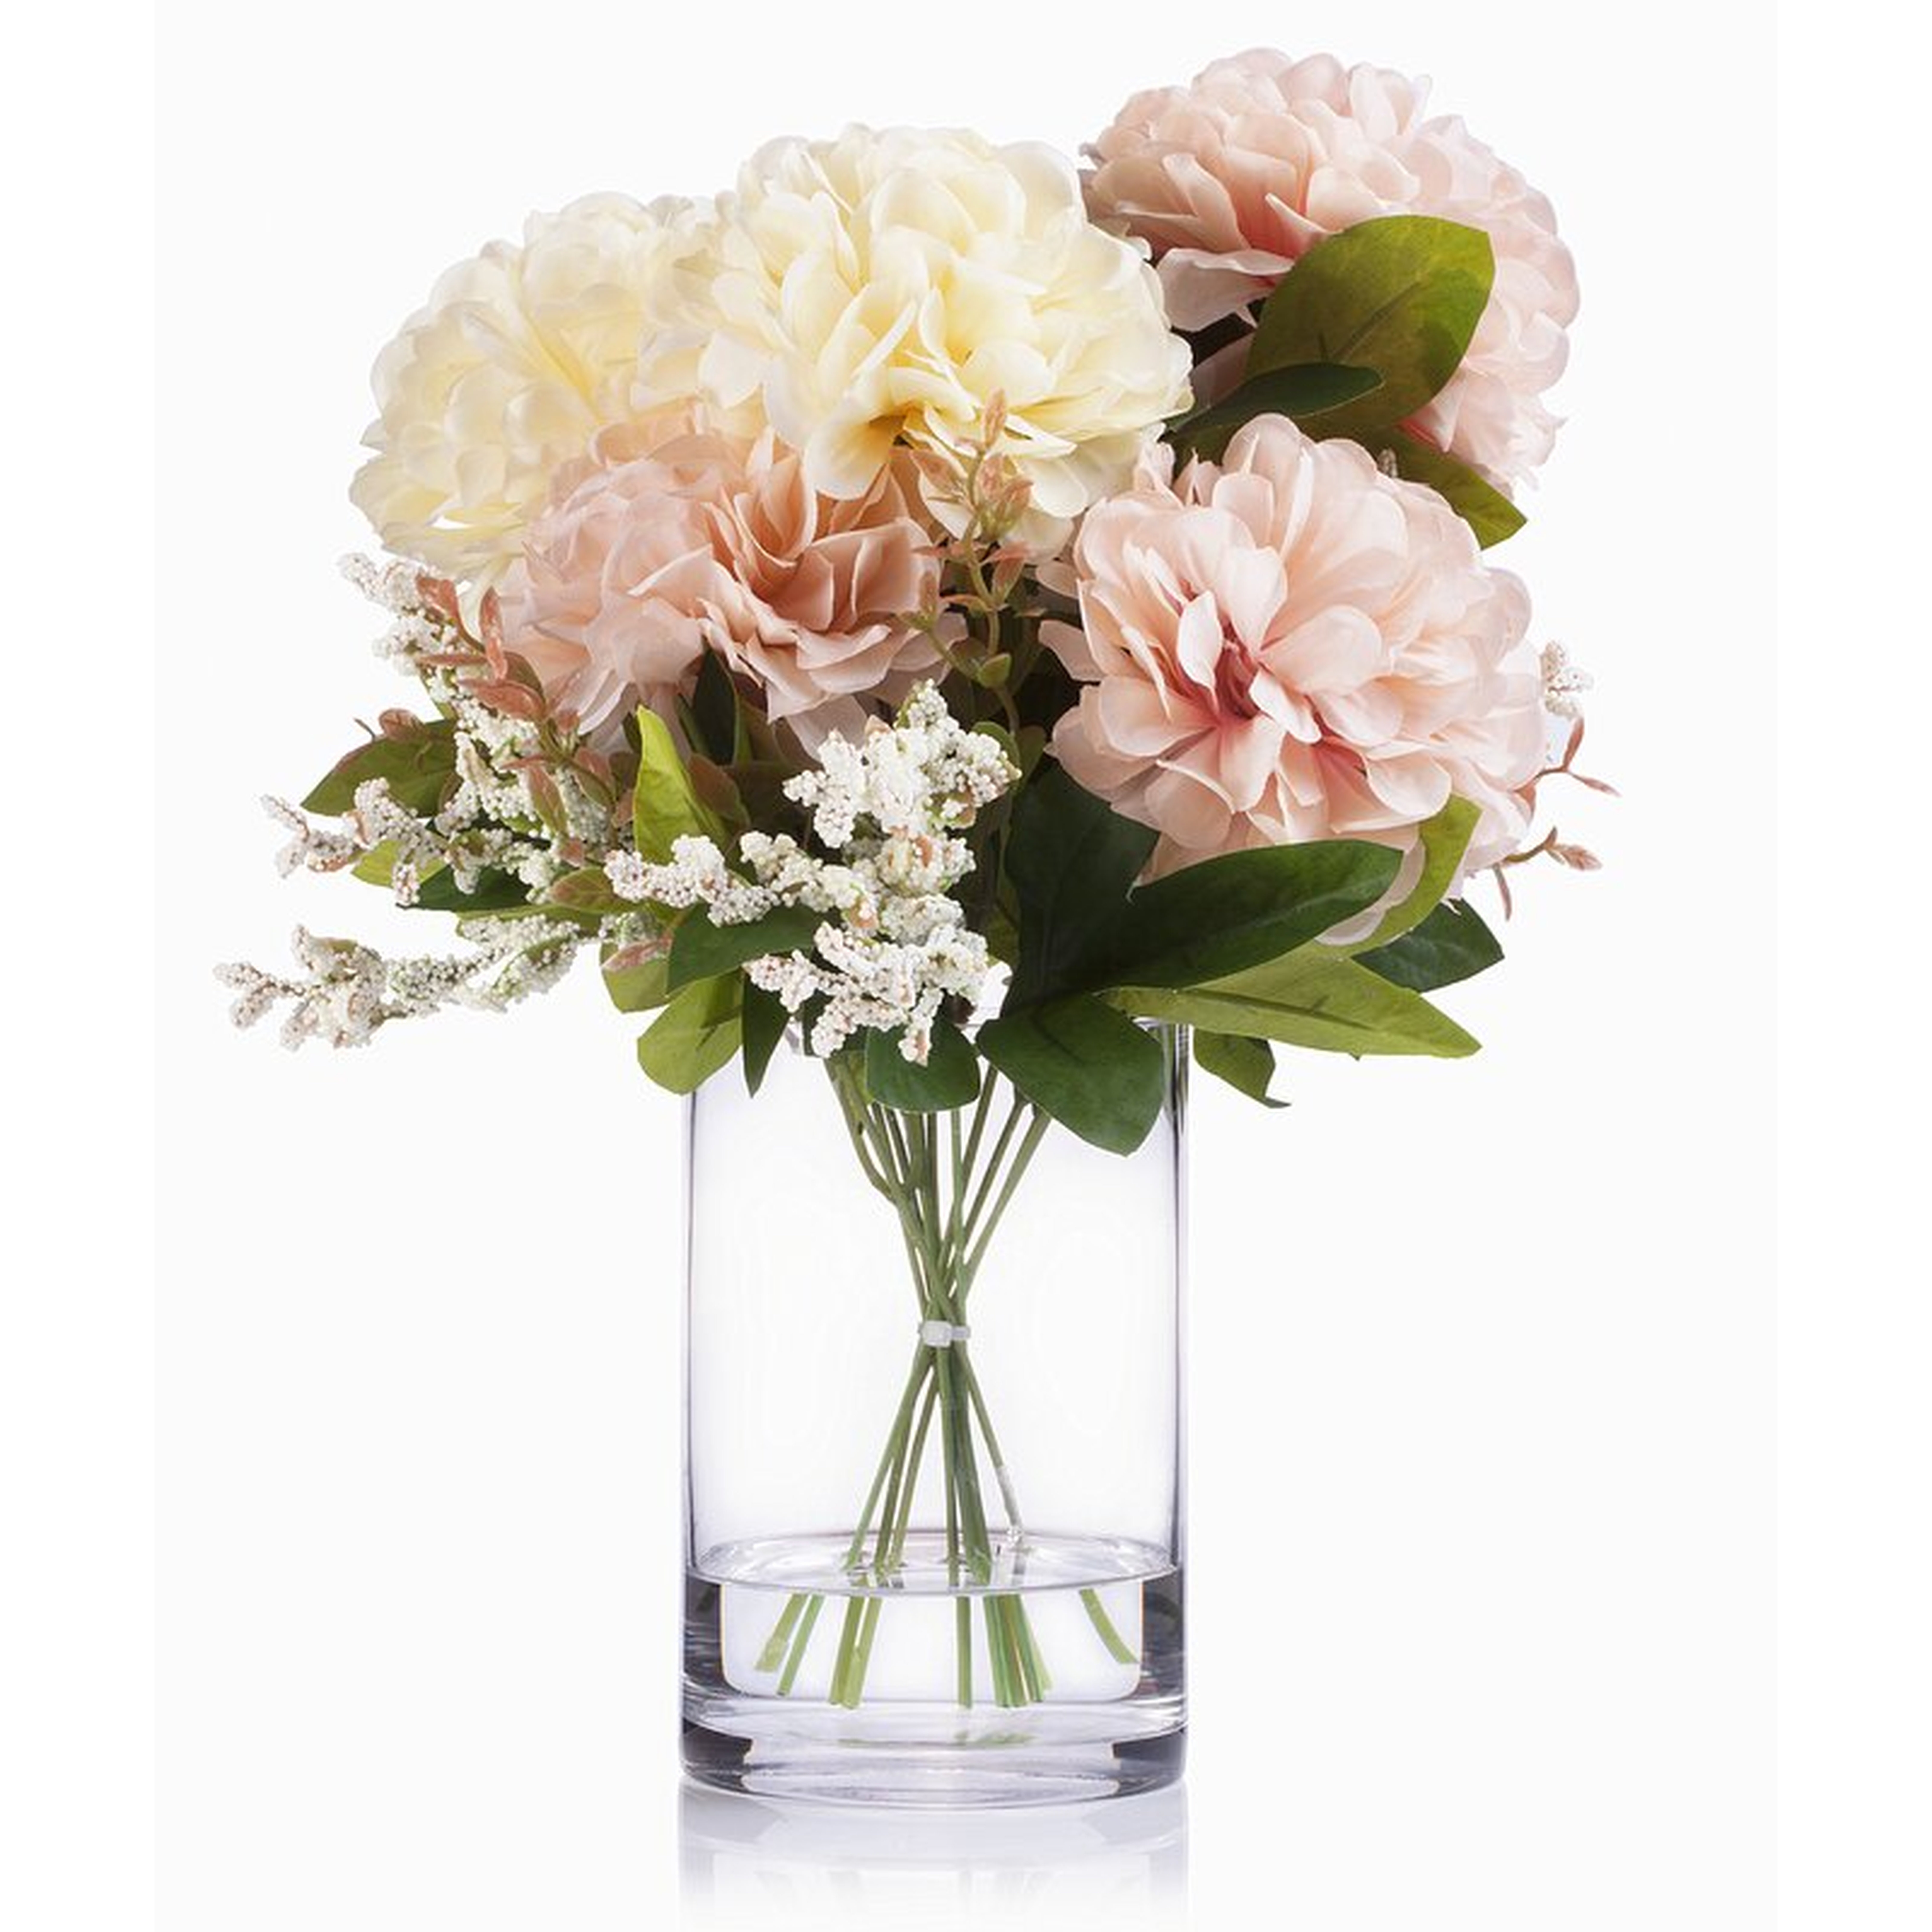 Dahlia Floral Arrangements in Vase, Cream & Pink - Wayfair